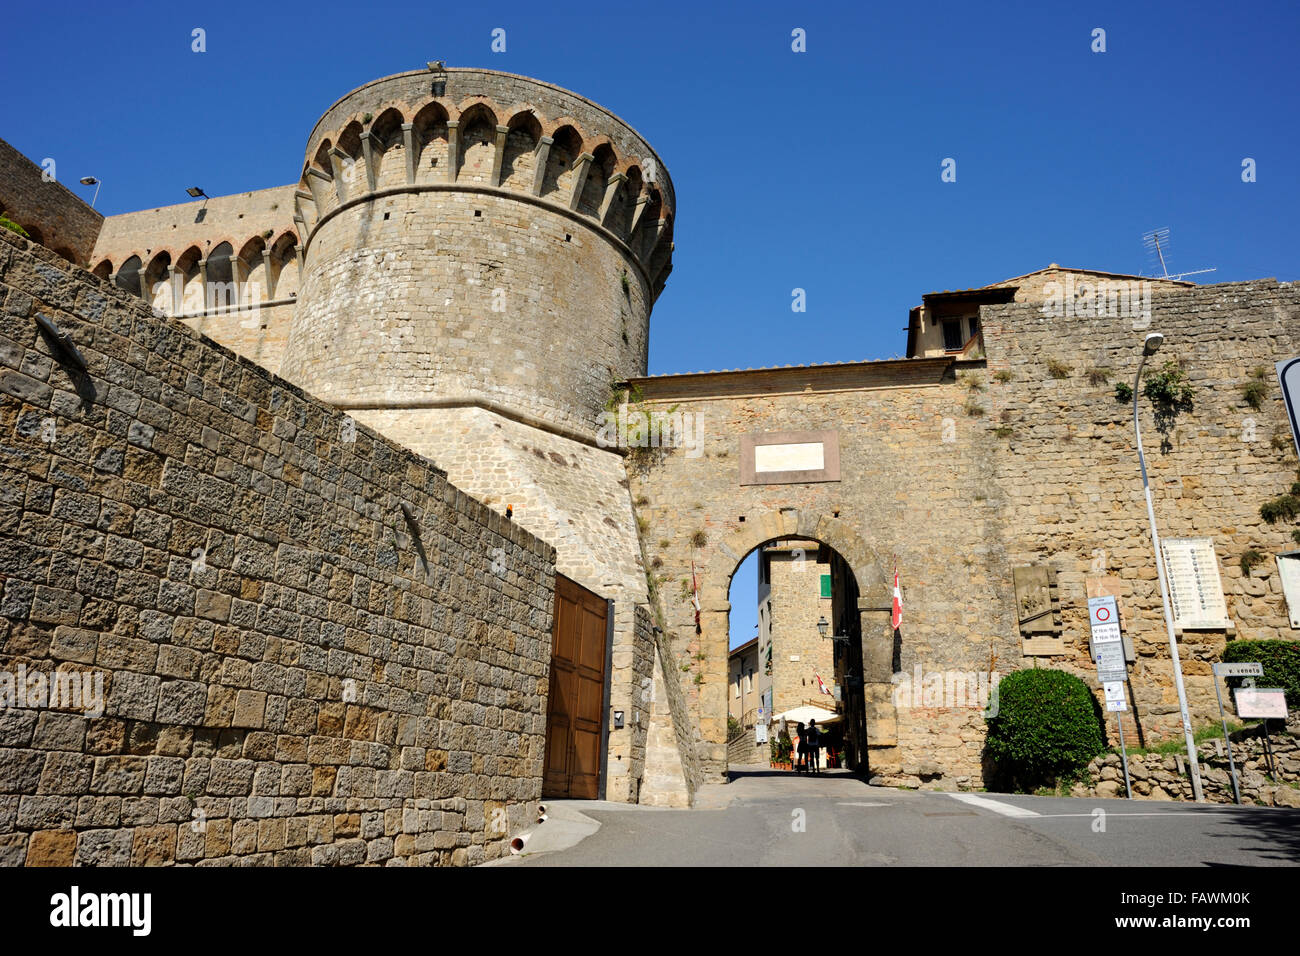 Porta a Selci gate and fortress (prison), Volterra, Tuscany, Italy Stock Photo